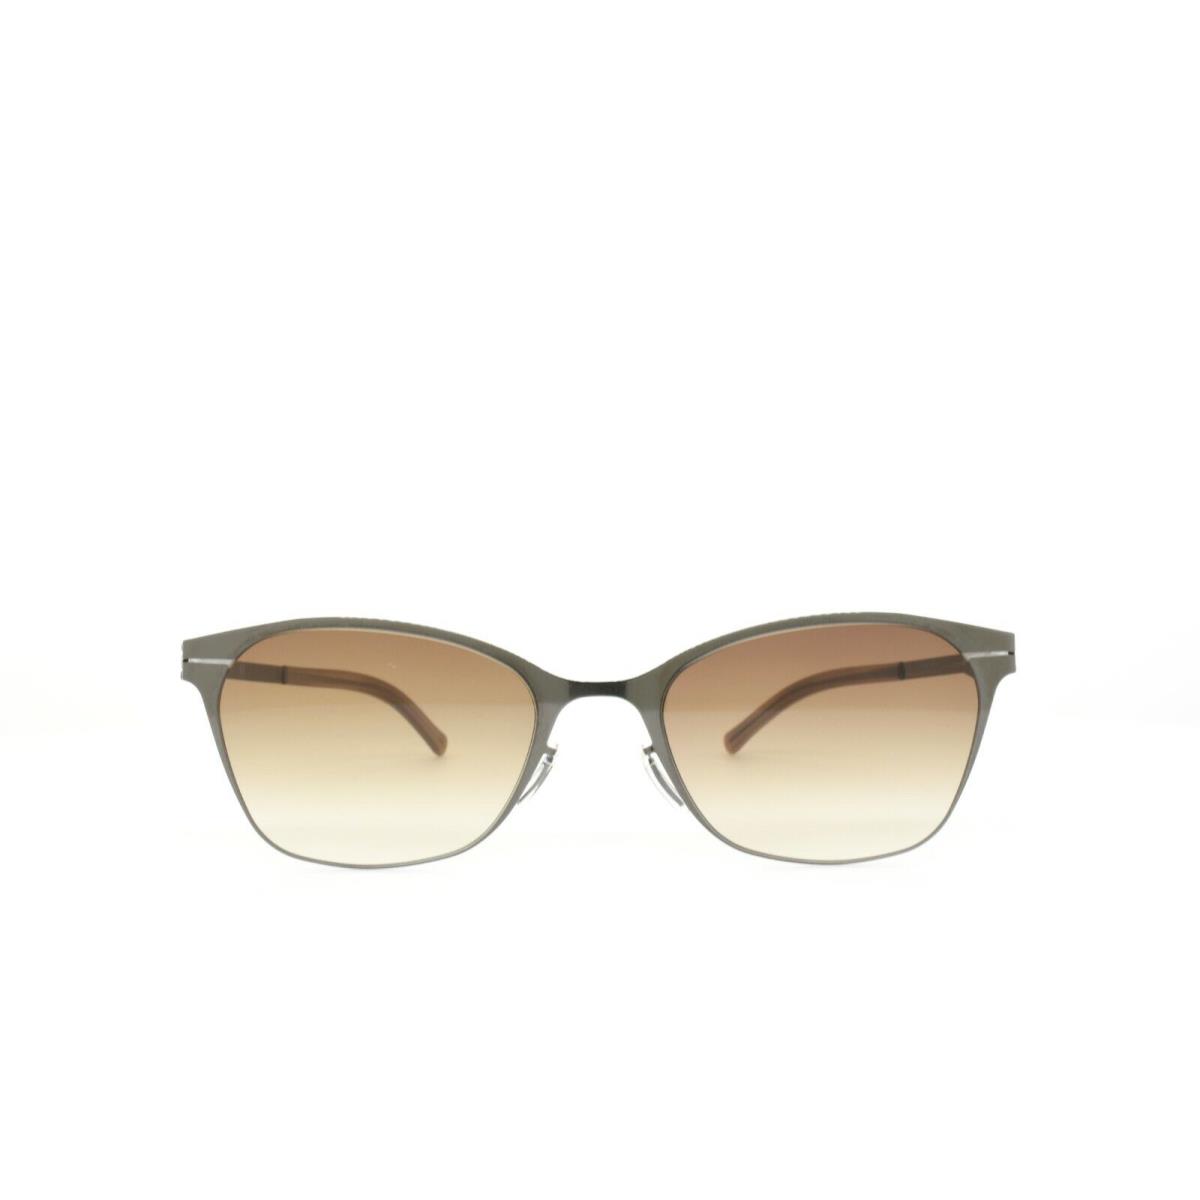 iC Berlin Sunglasses Tina H. Gunmetal 53-21-145 - Frame: